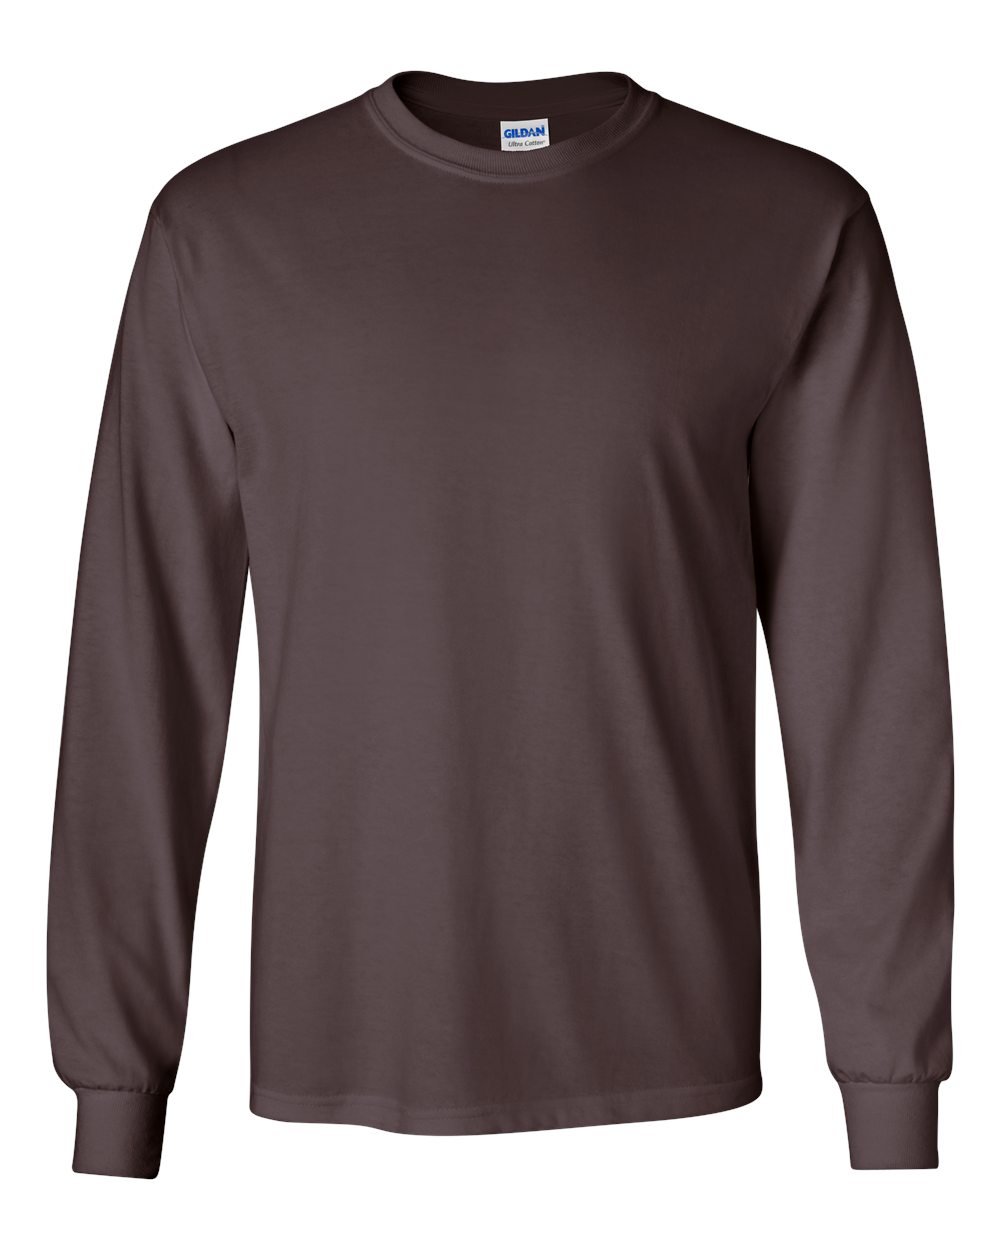 Gildan G2400 - Adult Ultra Cotton Long-Sleeve T-Shirt $6.80 - T-Shirts